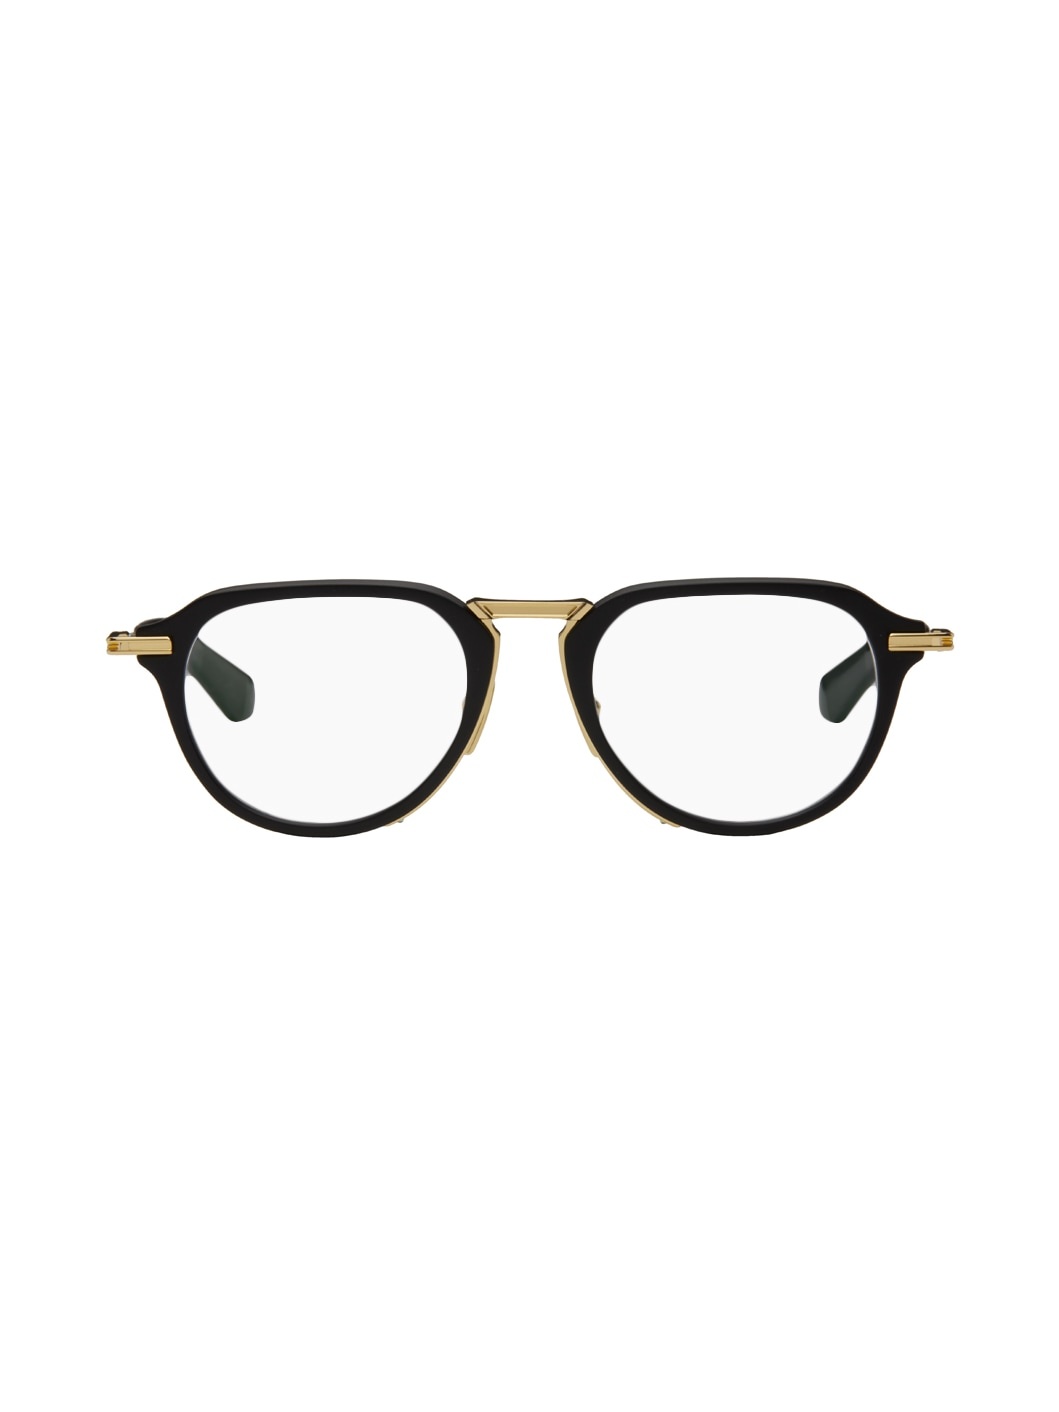 Black & Gold Altrist Glasses - 1